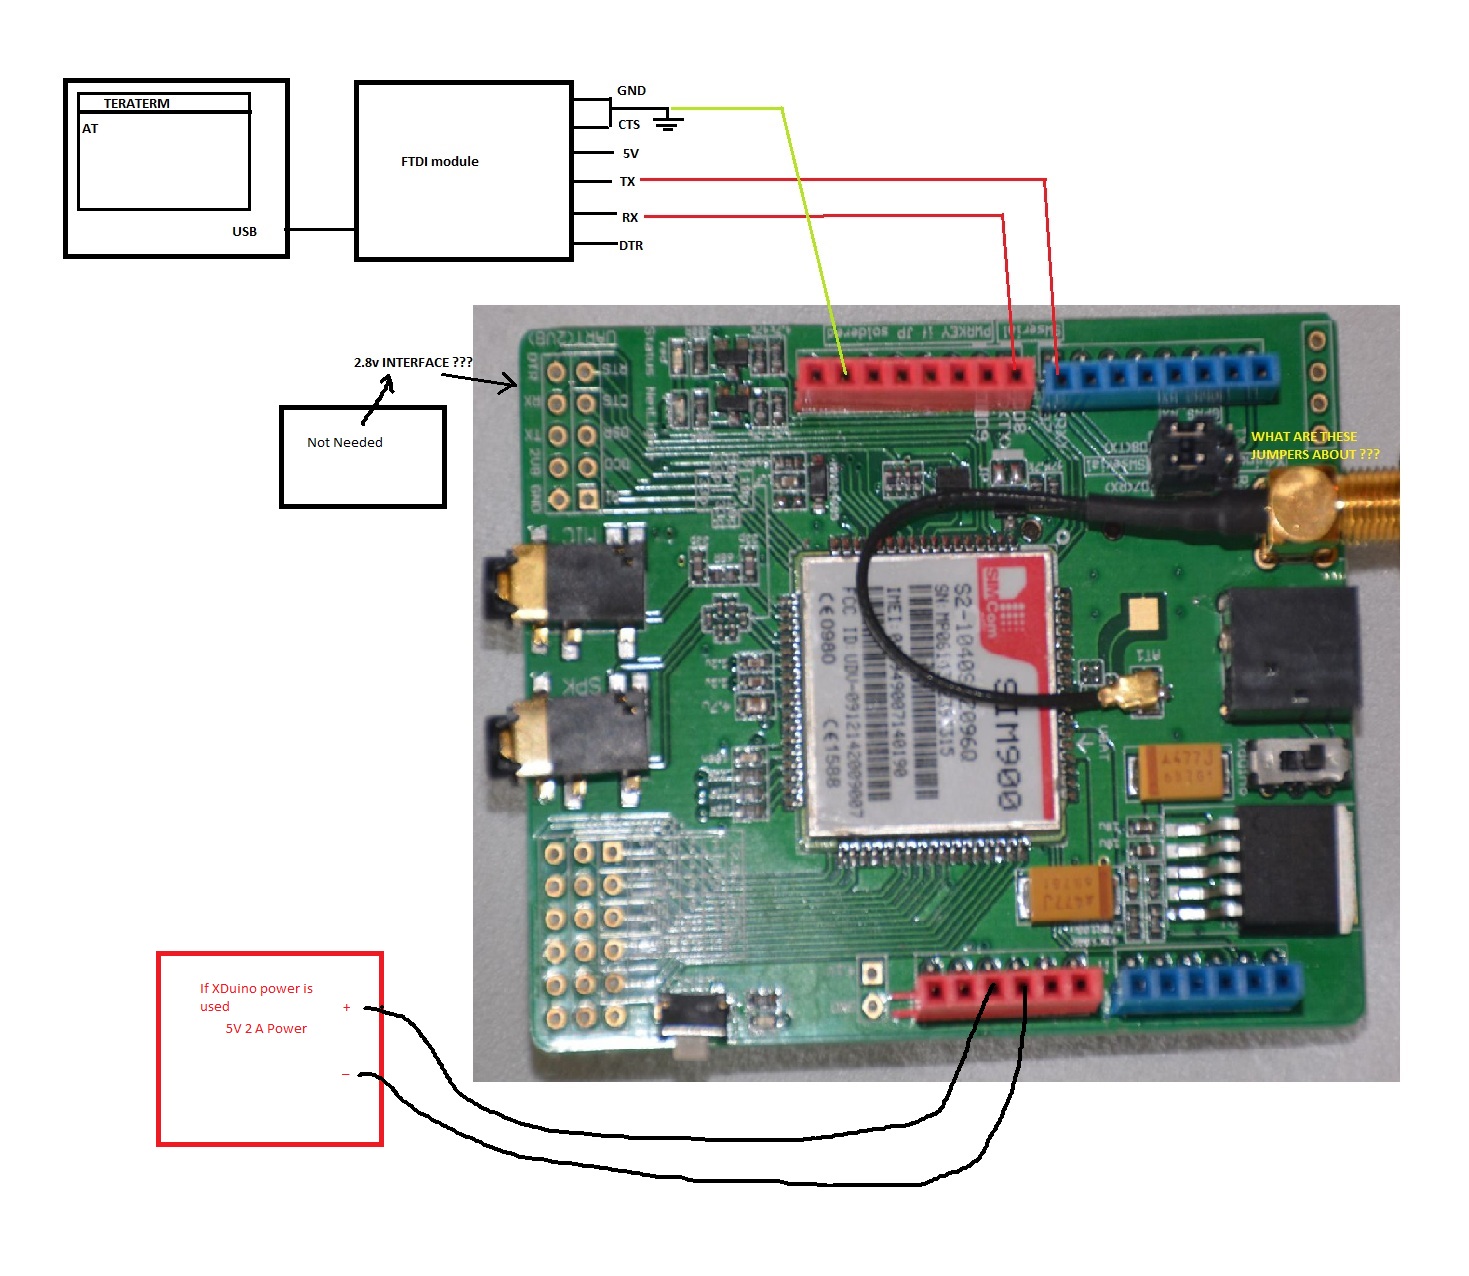 SIM900a Modem IMEI 0, Help with TX RX Pins - Microcontrollers - Arduino  Forum